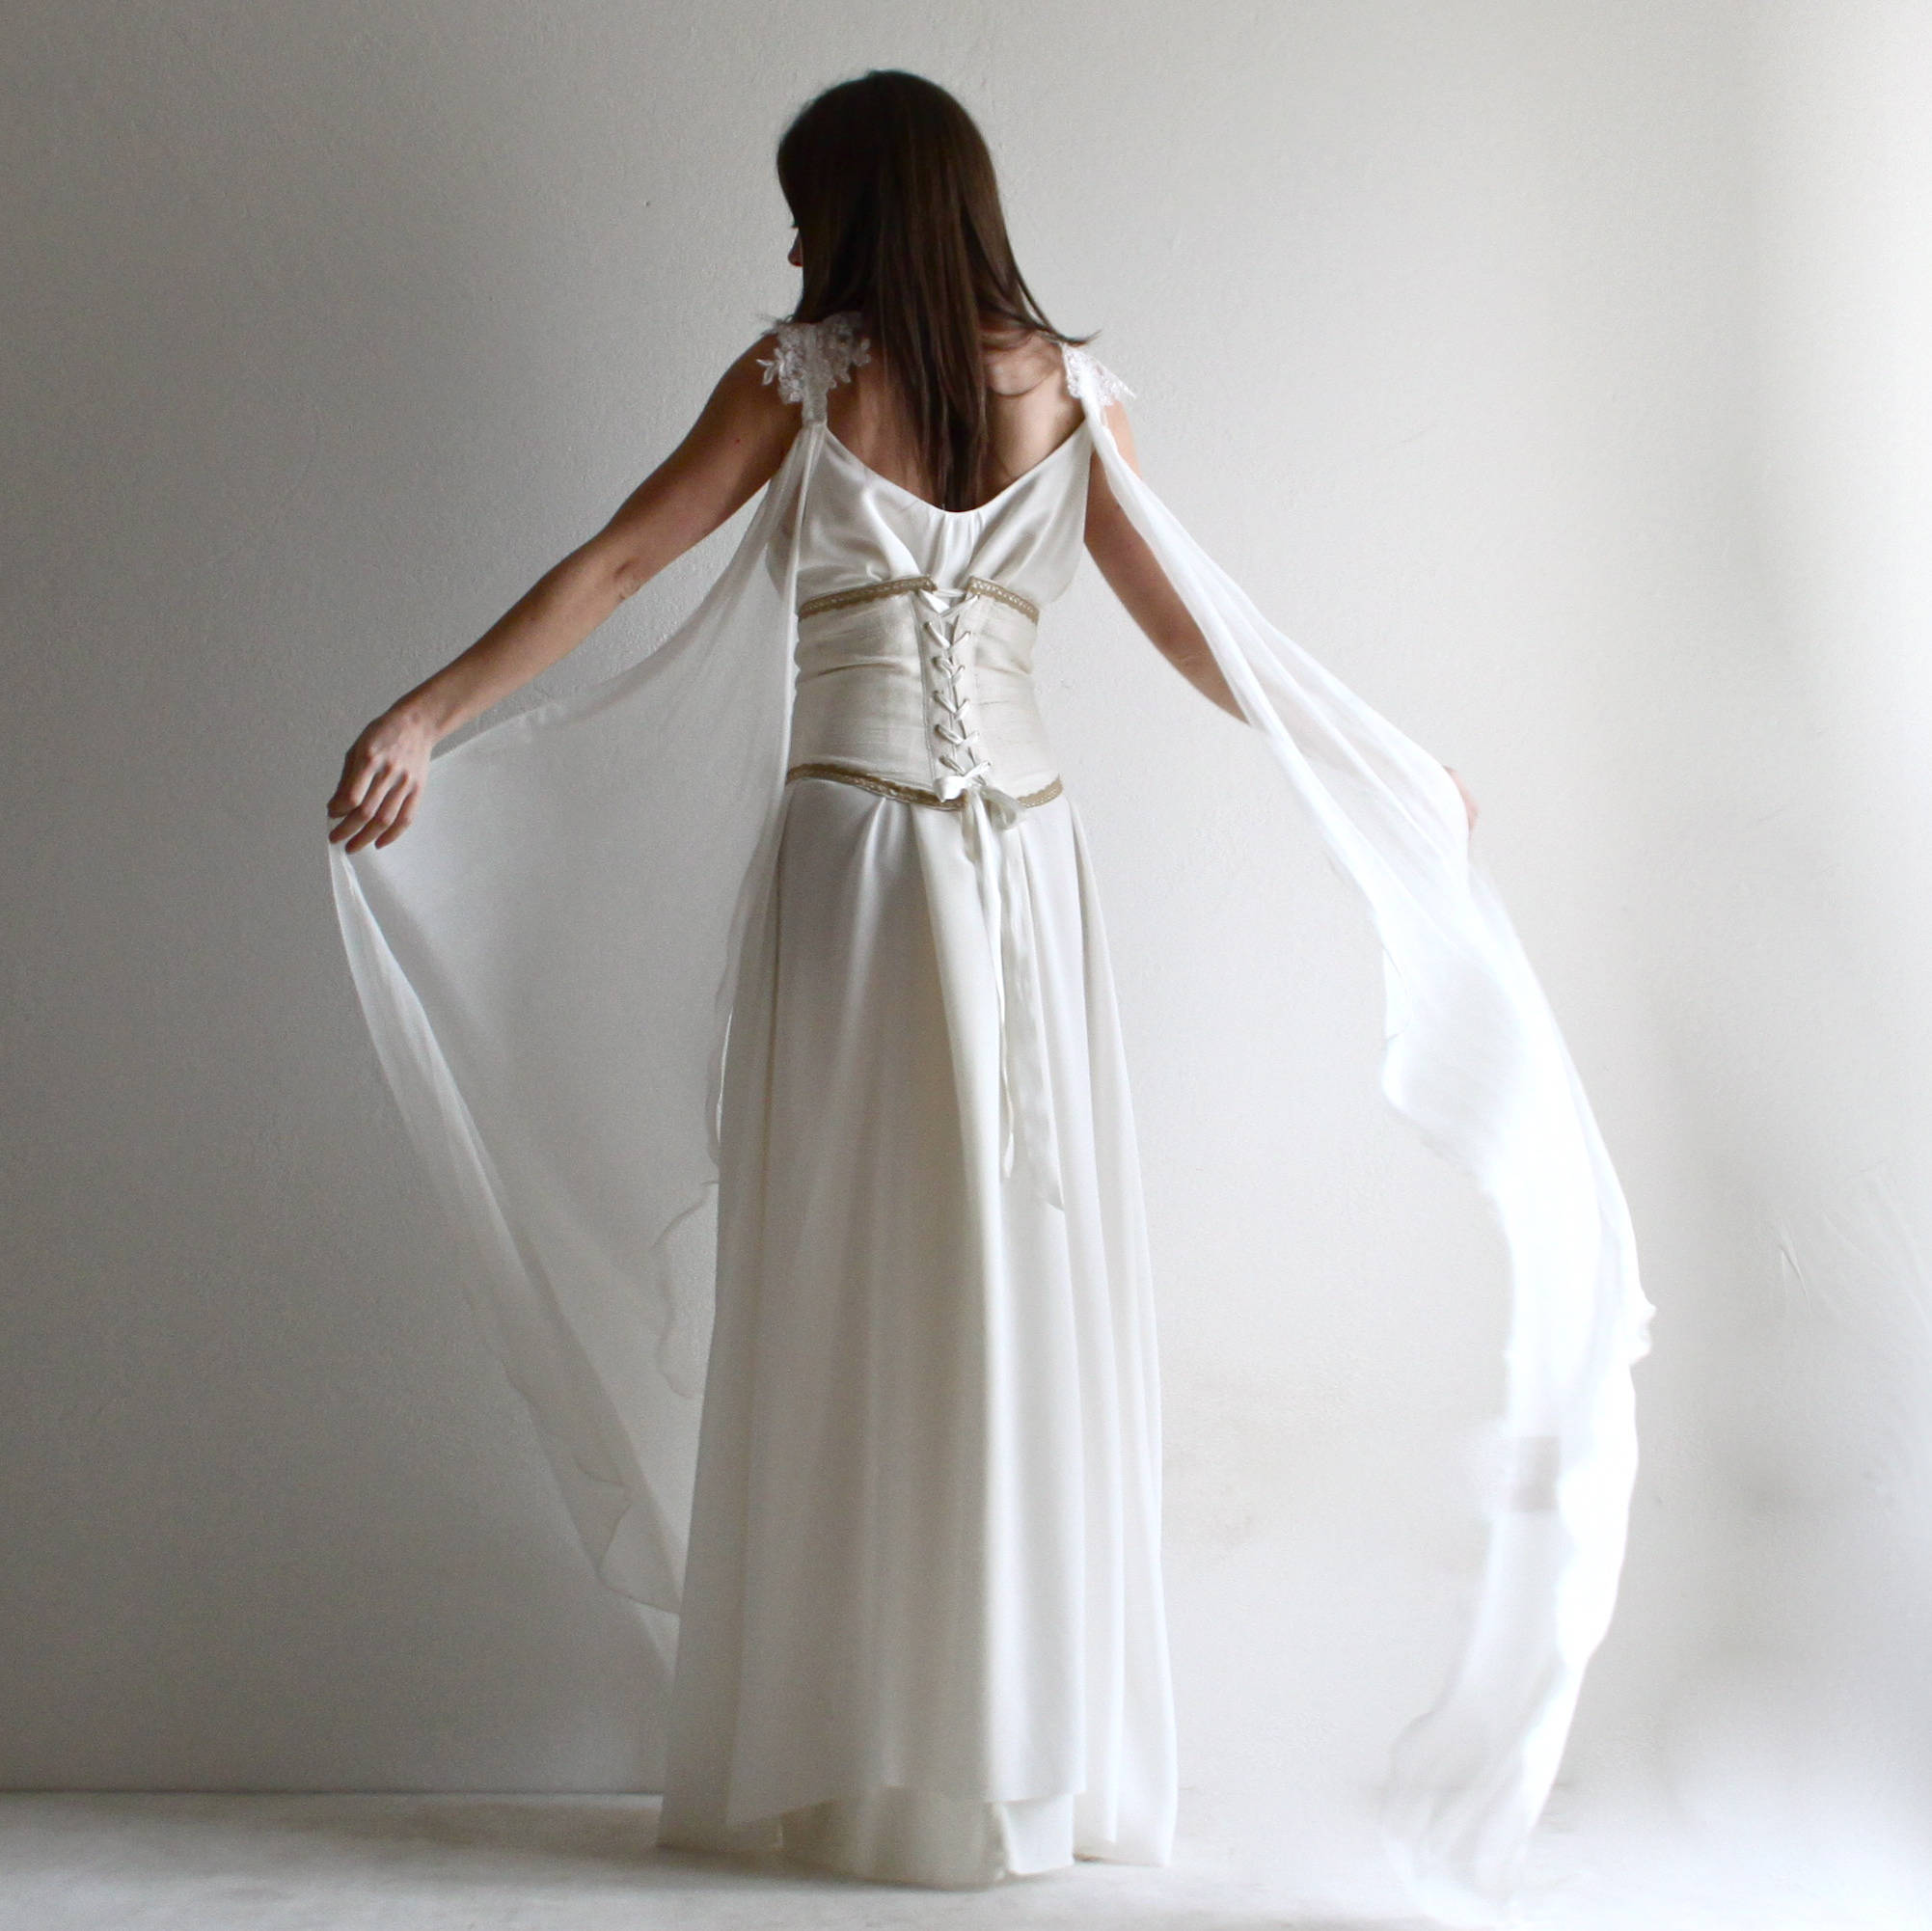 fantasy wedding guest fashion | Gallery posted by Katarina | Lemon8